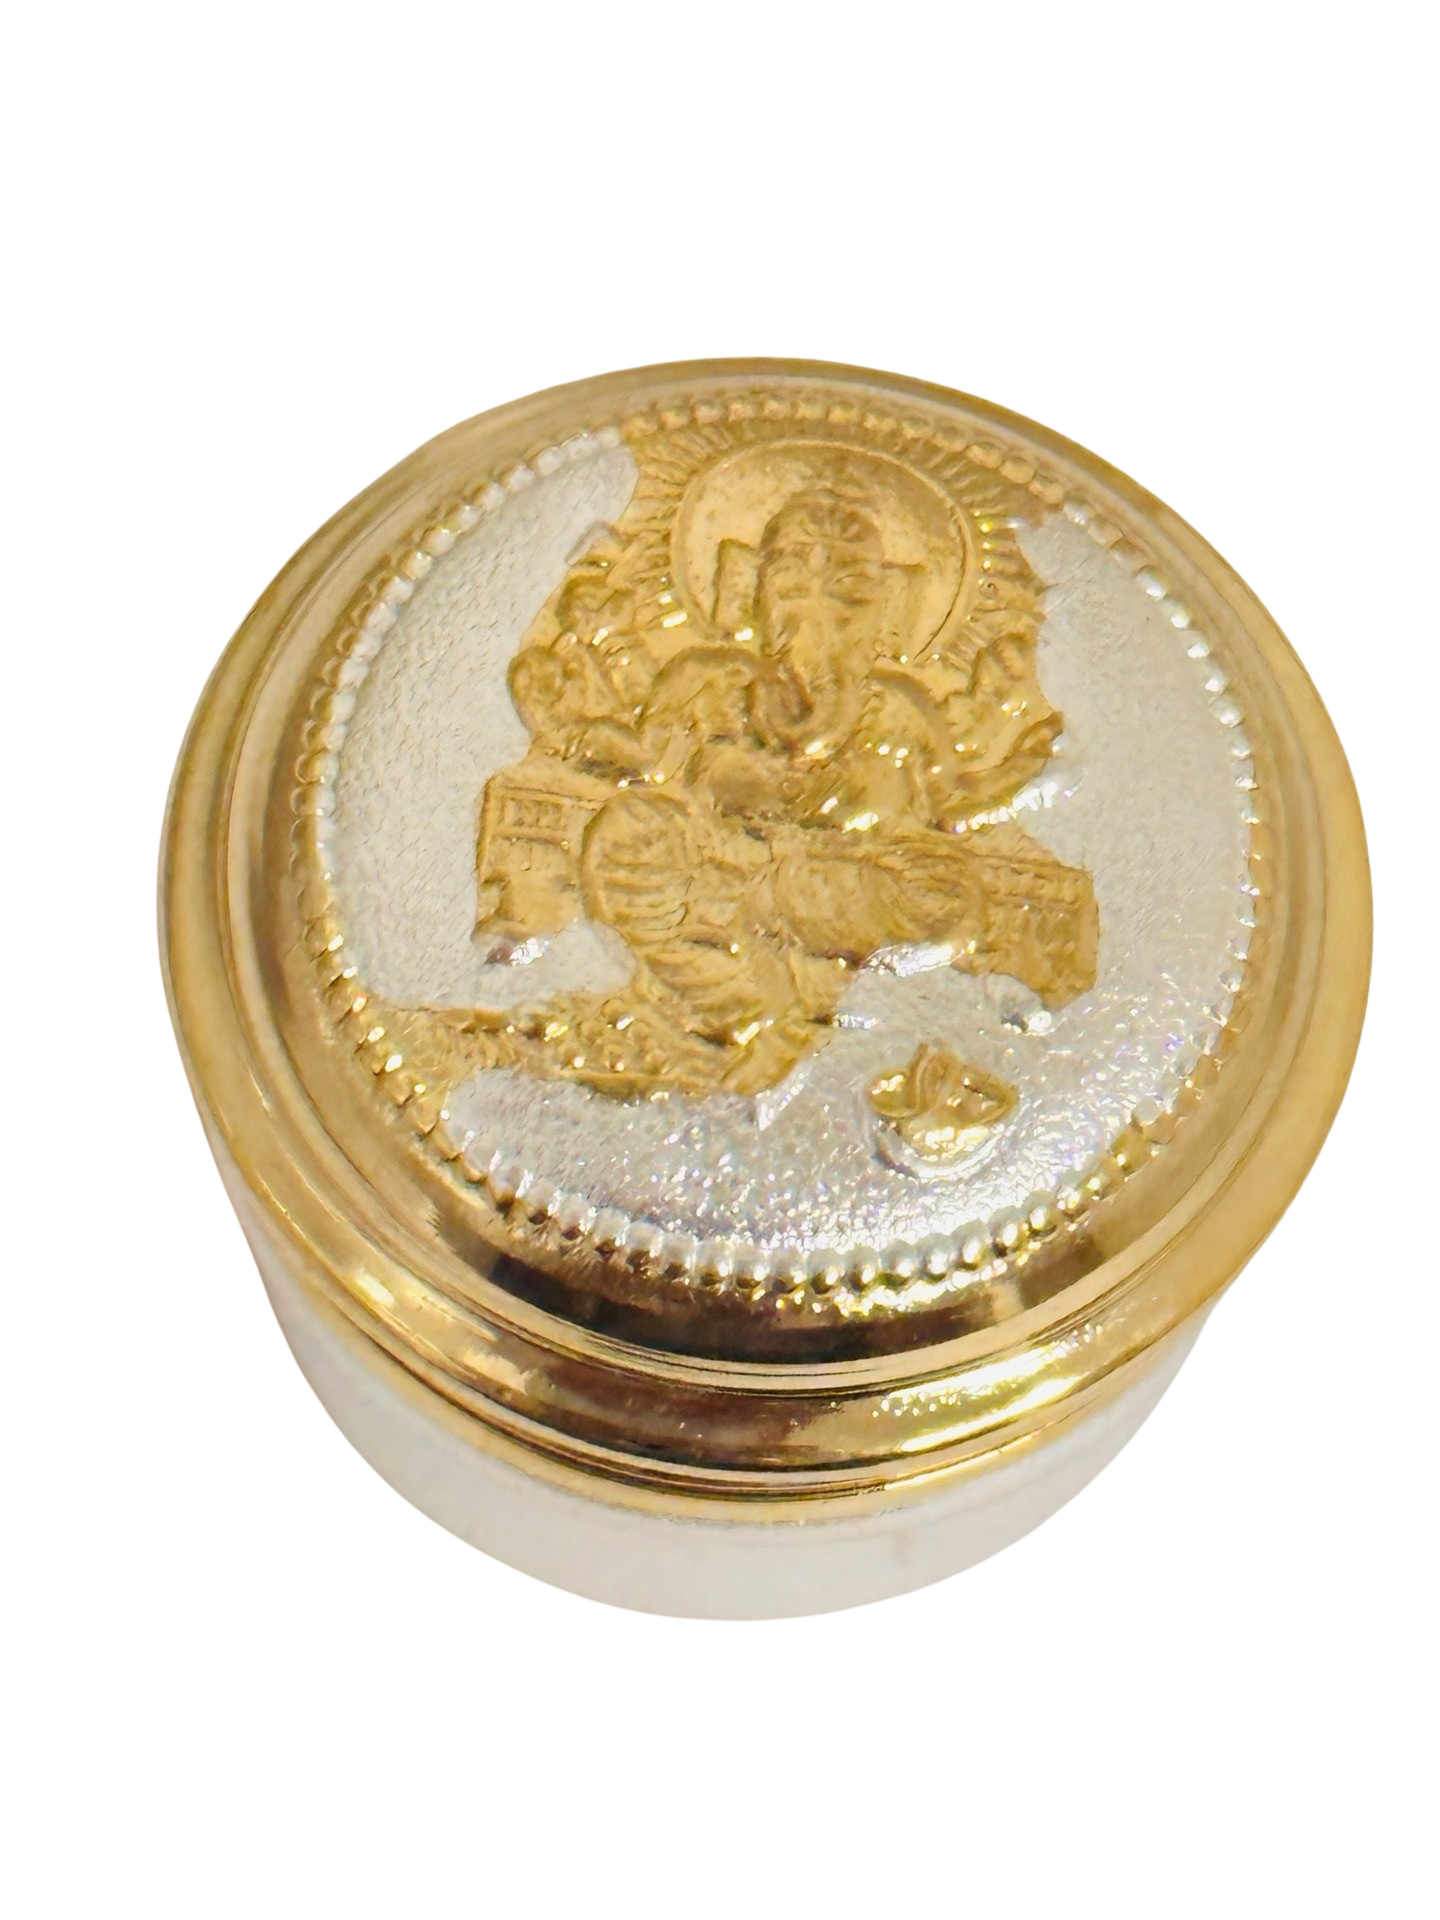 Gold Plated Silver KumKum Box